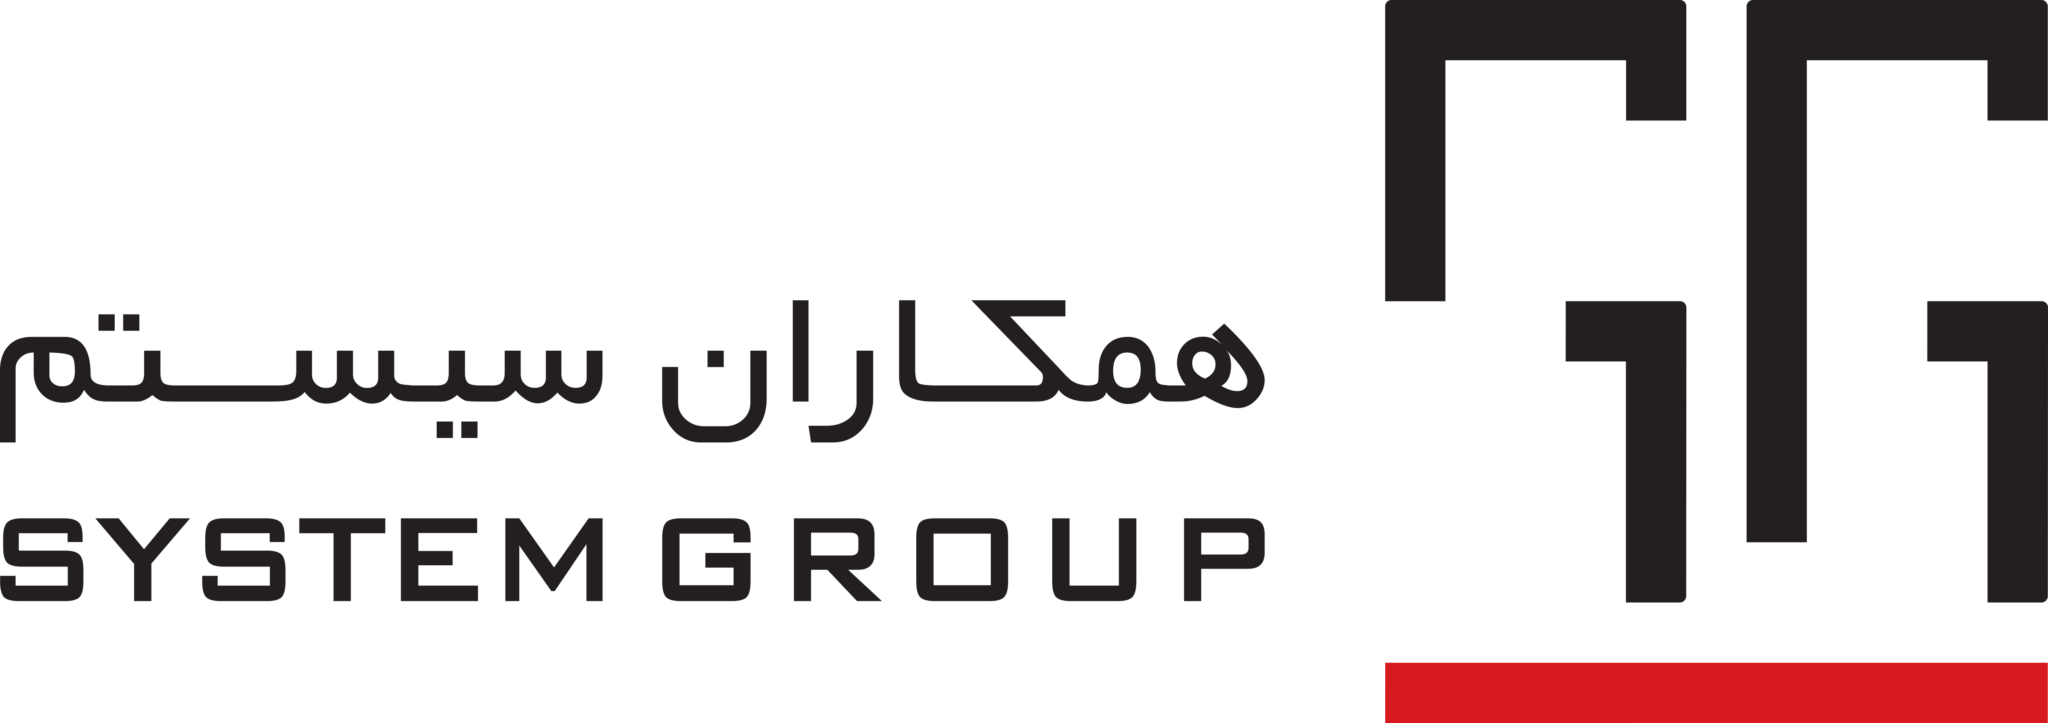 Level Group лого. Группа система. OОО "System Group ". T Plus Group логотип. Level group логотип